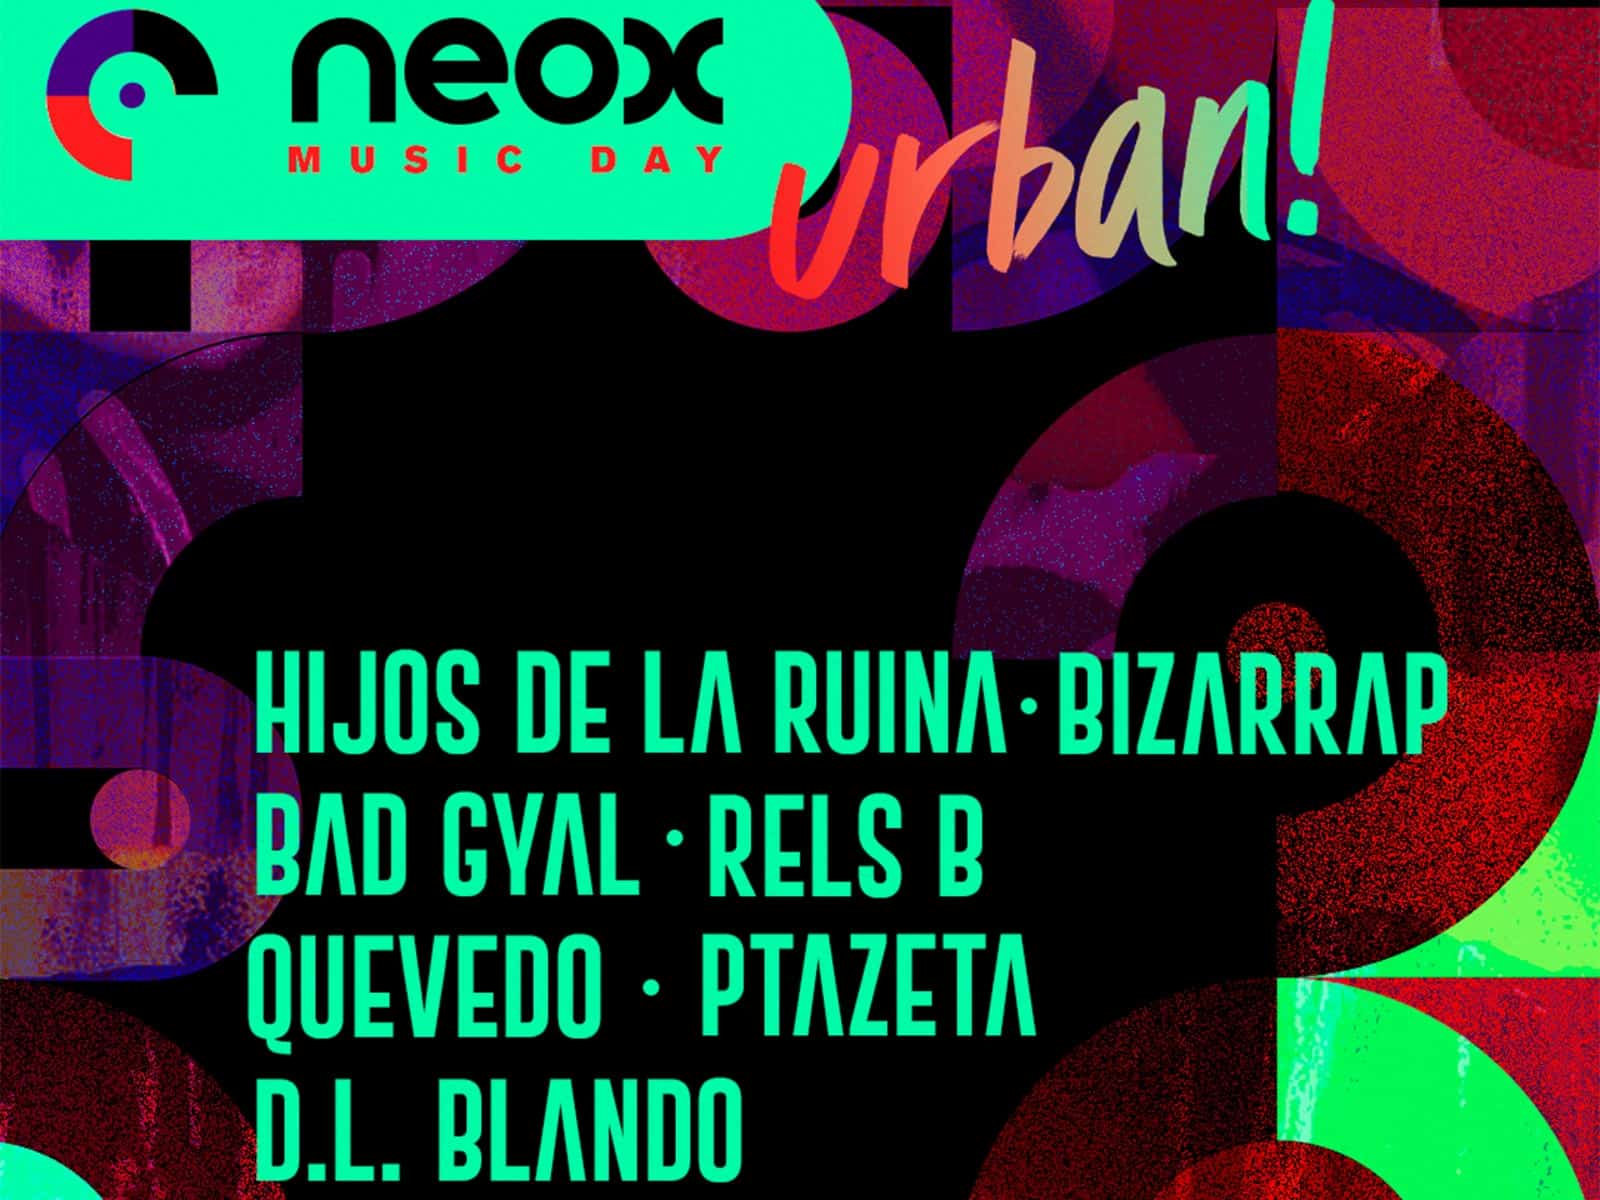 Neox Music Day llega a A Coruña con una selección de artistas exclusiva